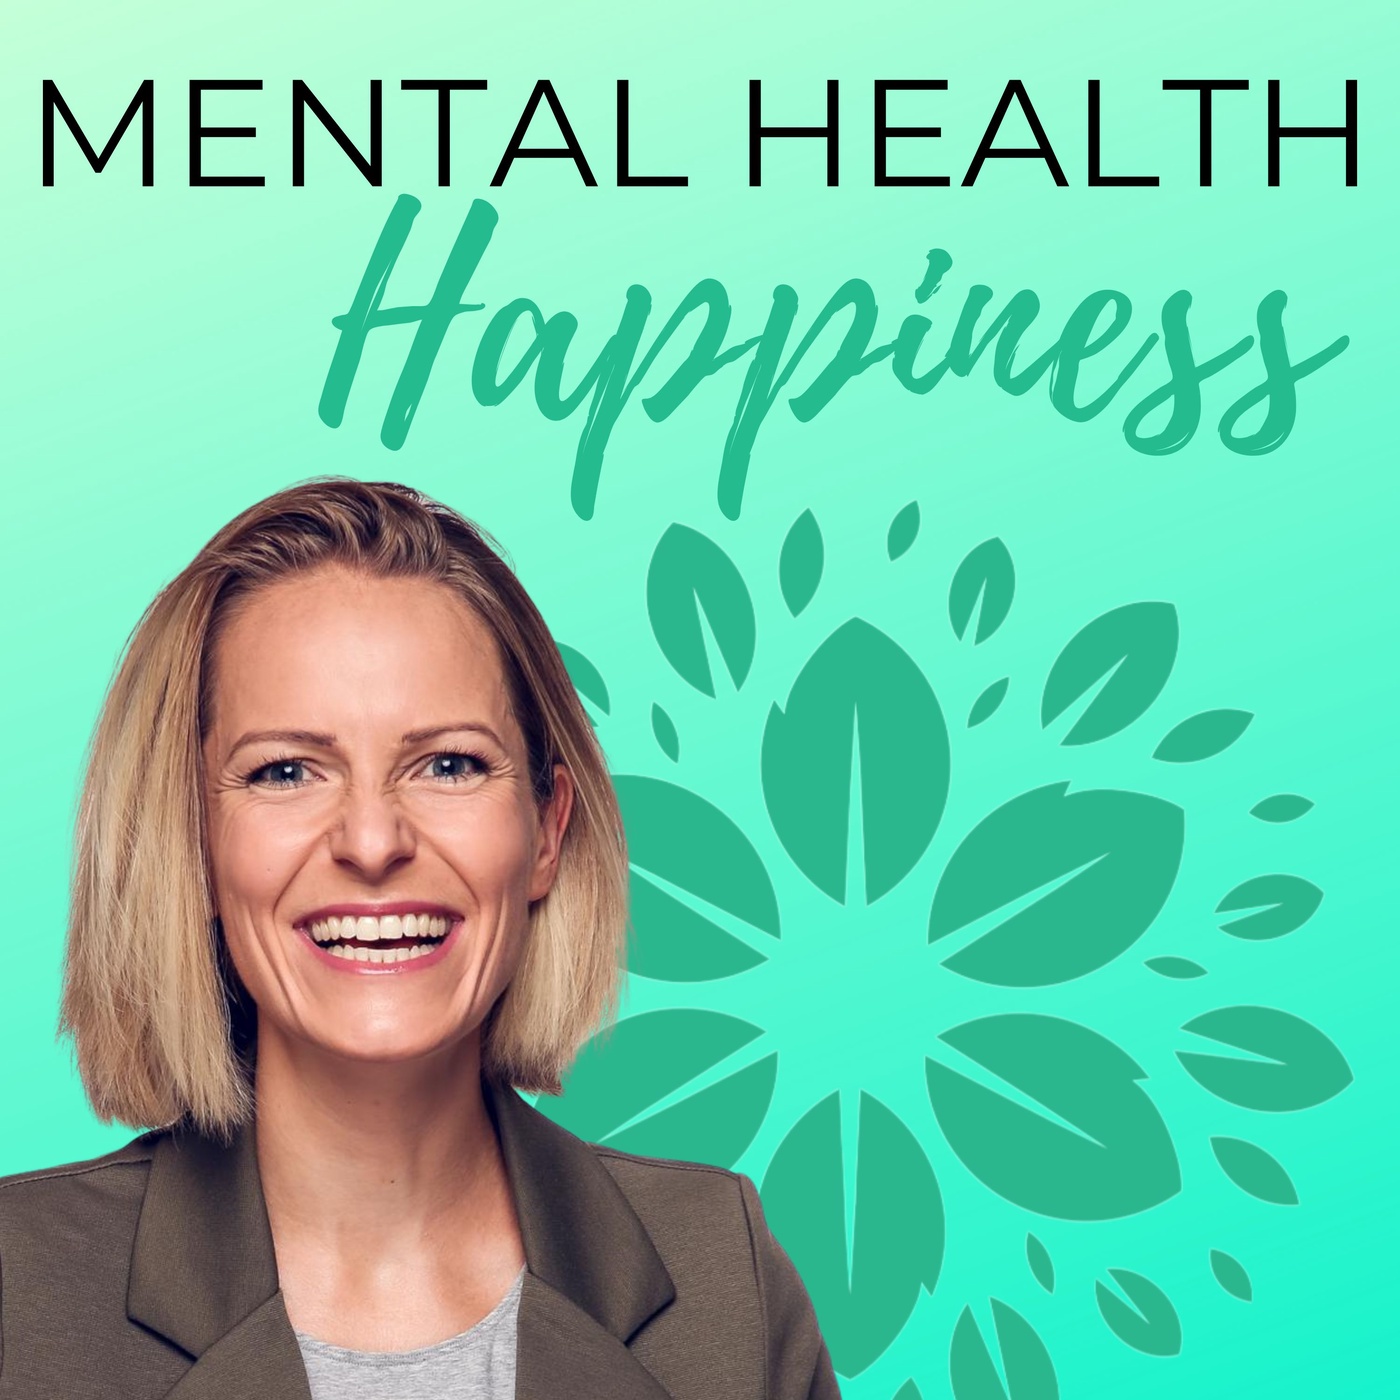 MENTAL HEALTH & HAPPINESS